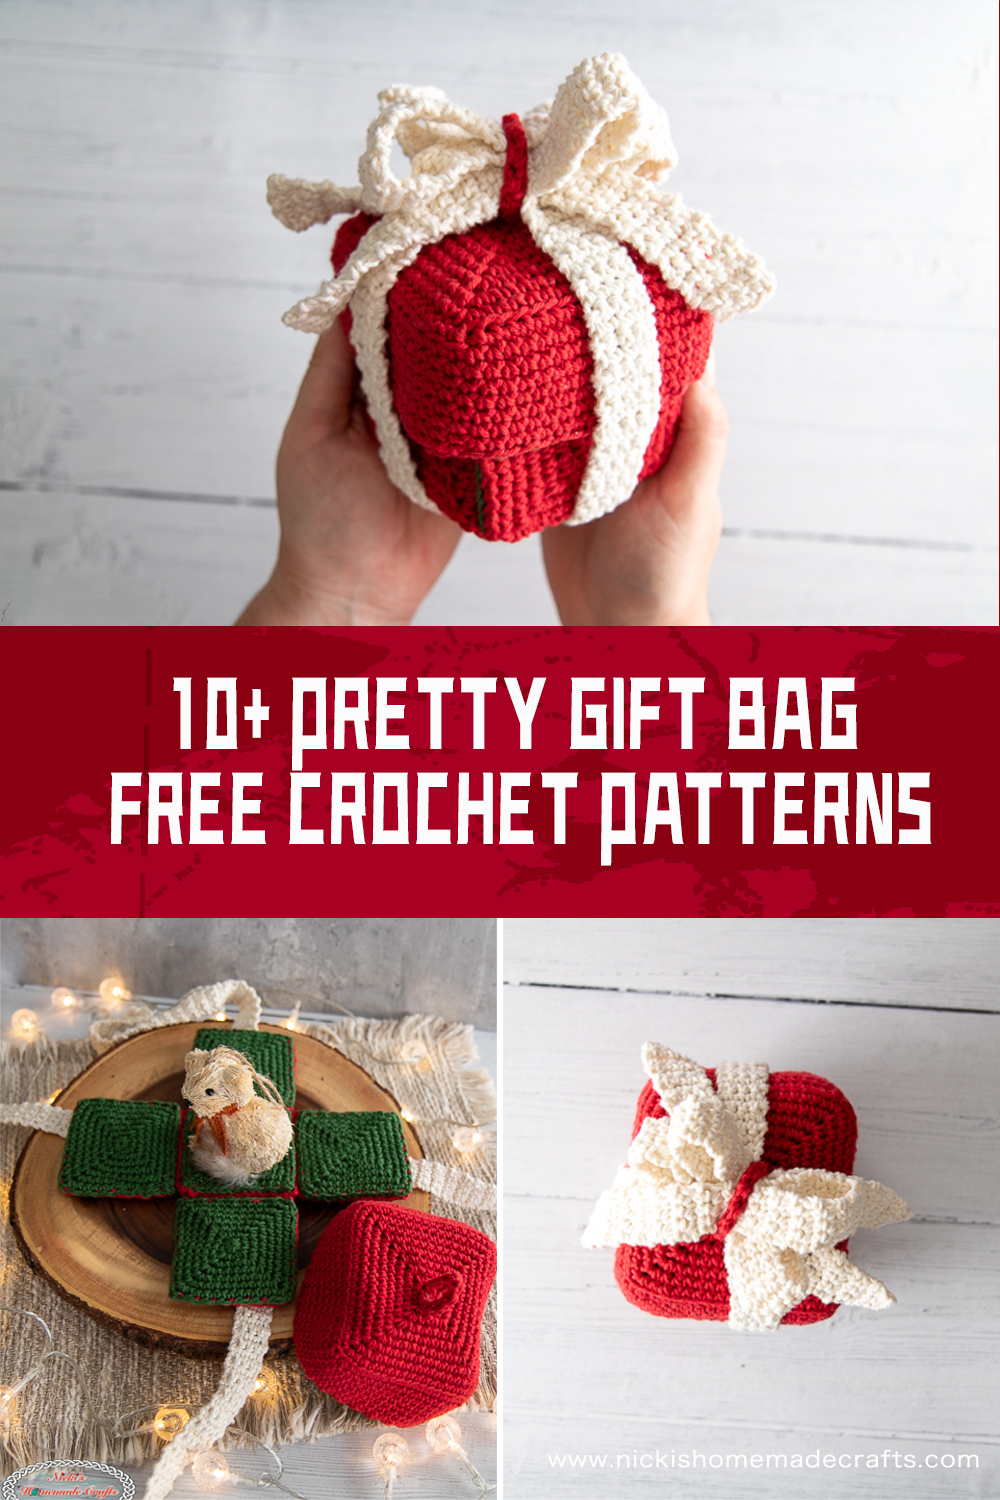 10+ Crochet Gift Bag FREE Patterns